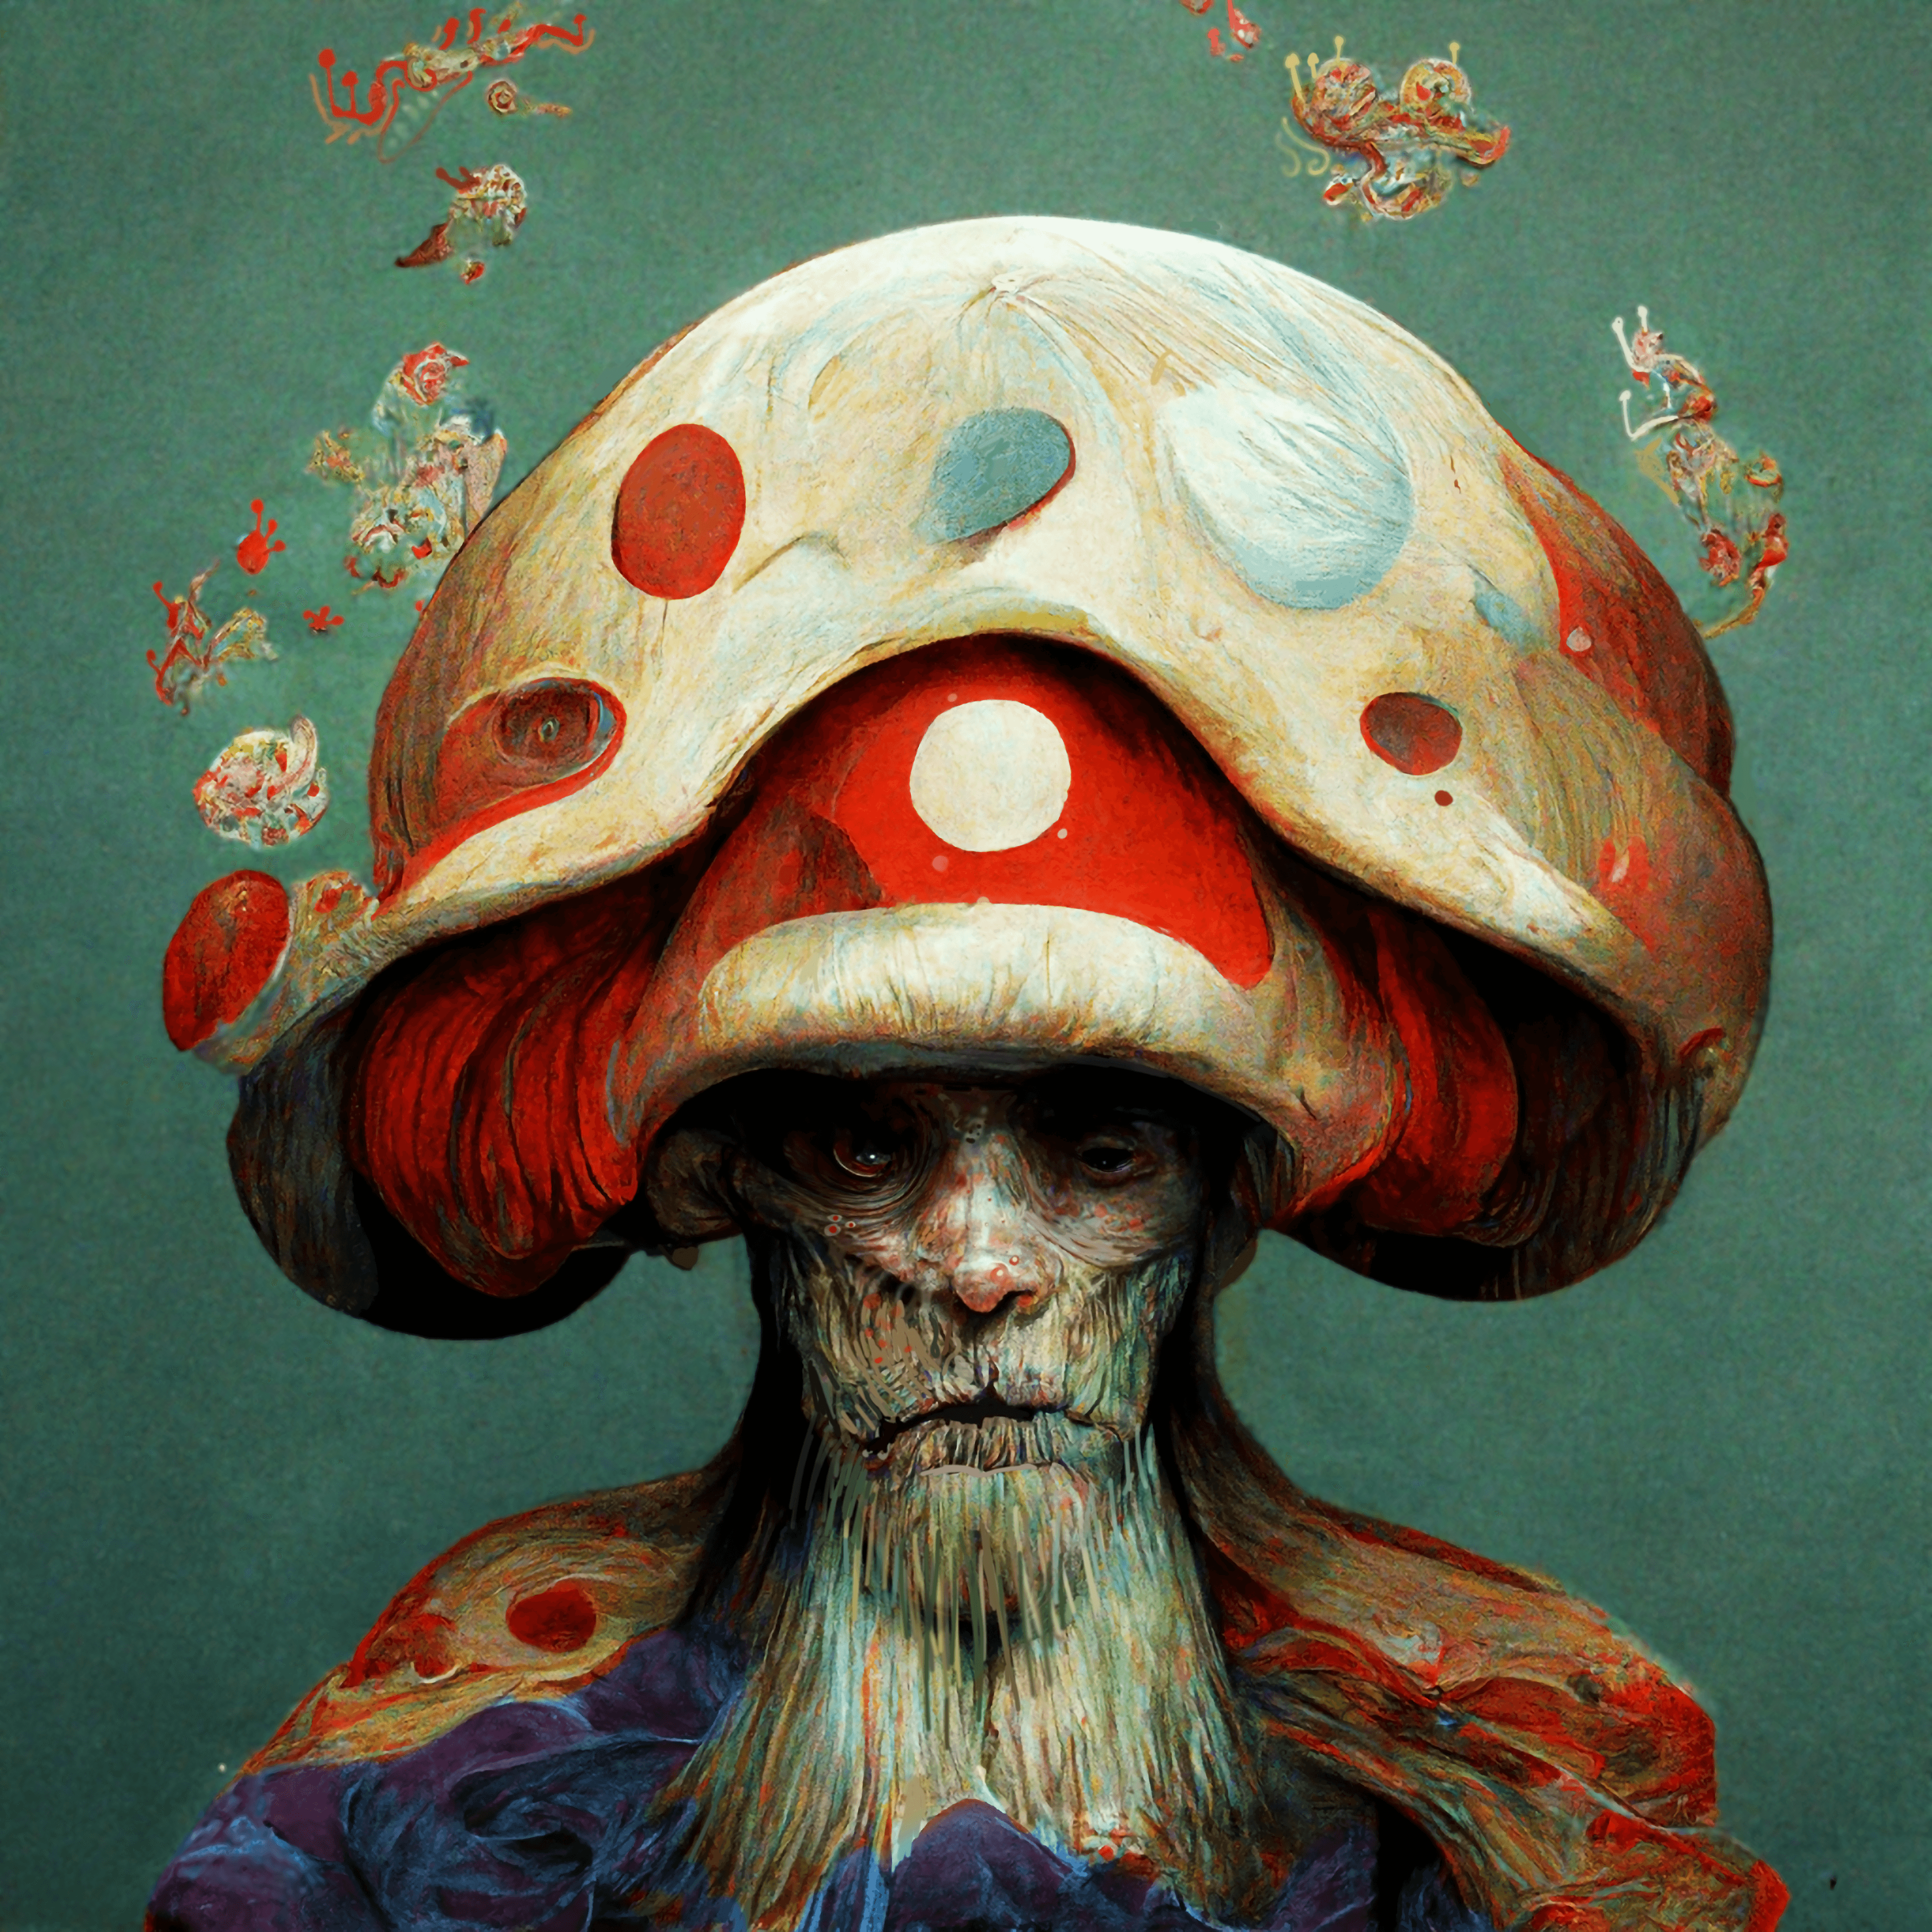 Mushroom Man #002